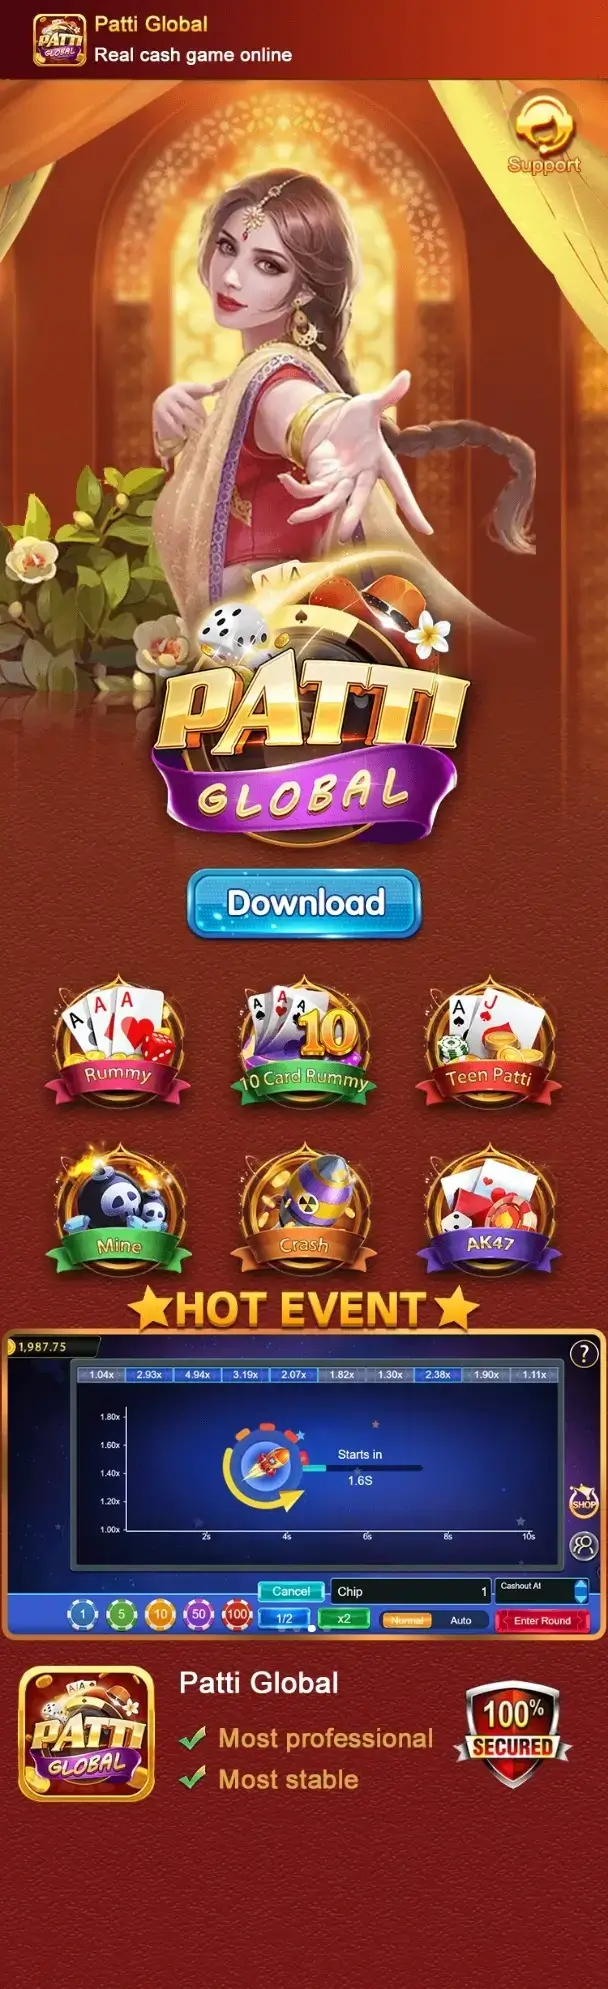 Teen Patti Global APK Download | Rummy Global APK Download | ₹51 Bonus | Global Teen Patti Download, Global Rummy App Download